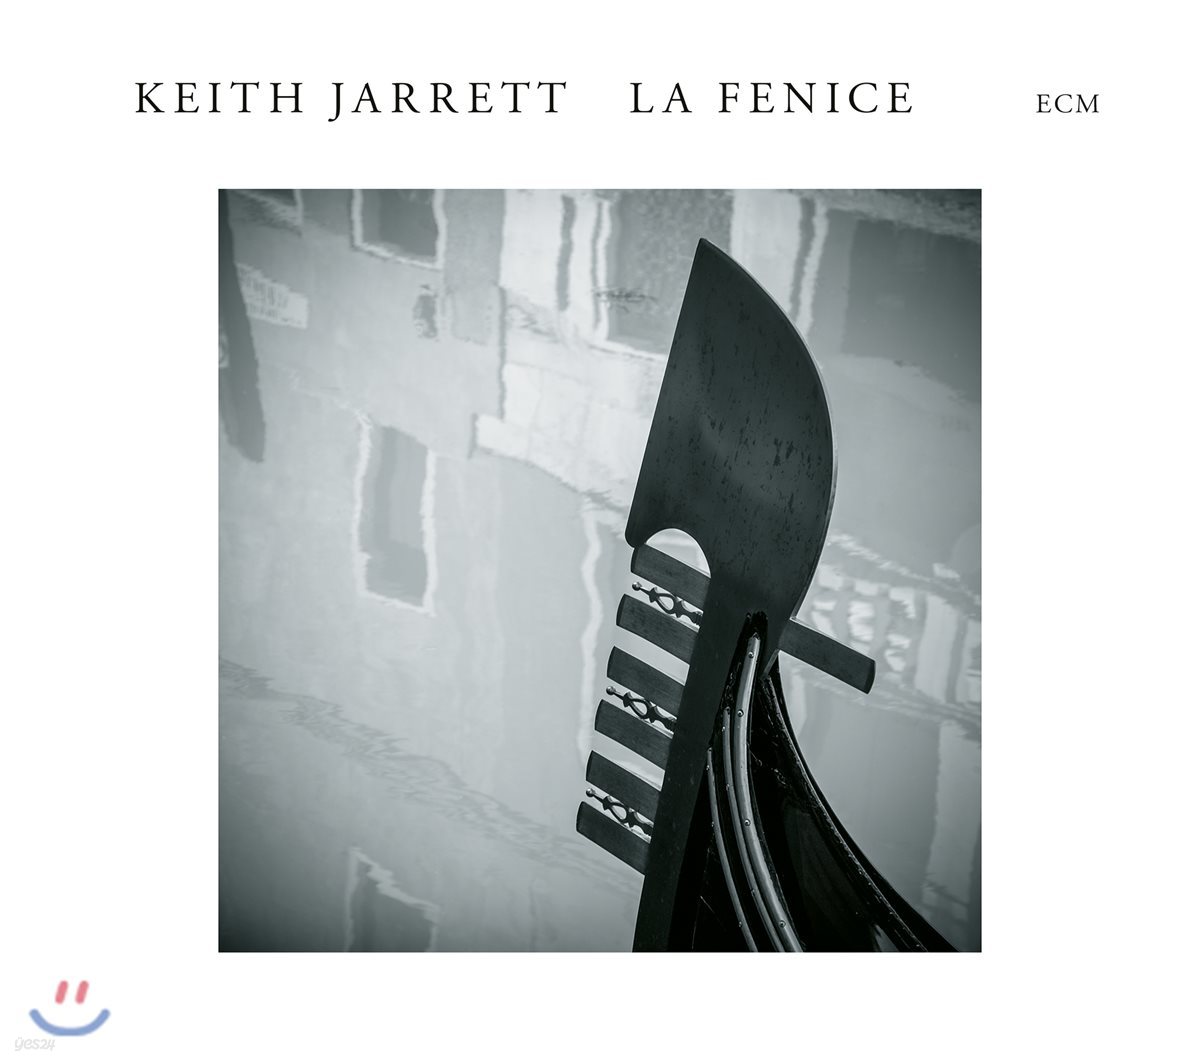 Keith Jarrett - La Fenice 키스 자렛 베네치아 라 페니체 솔로 콘서트 